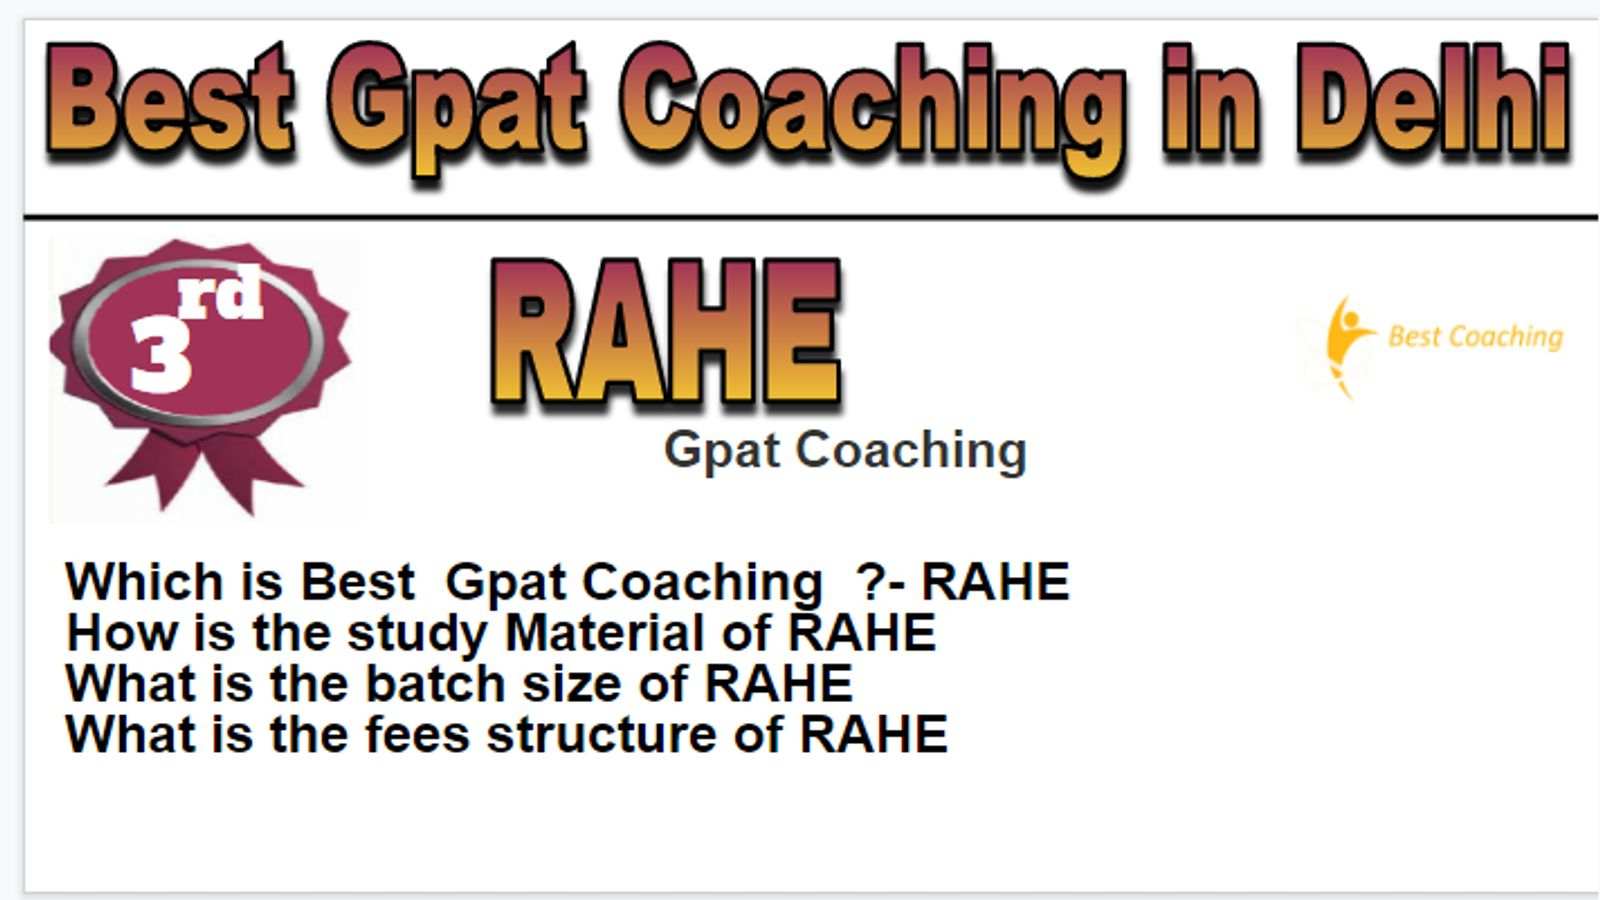 Rank 3 Best Gpat Coaching in Delhi